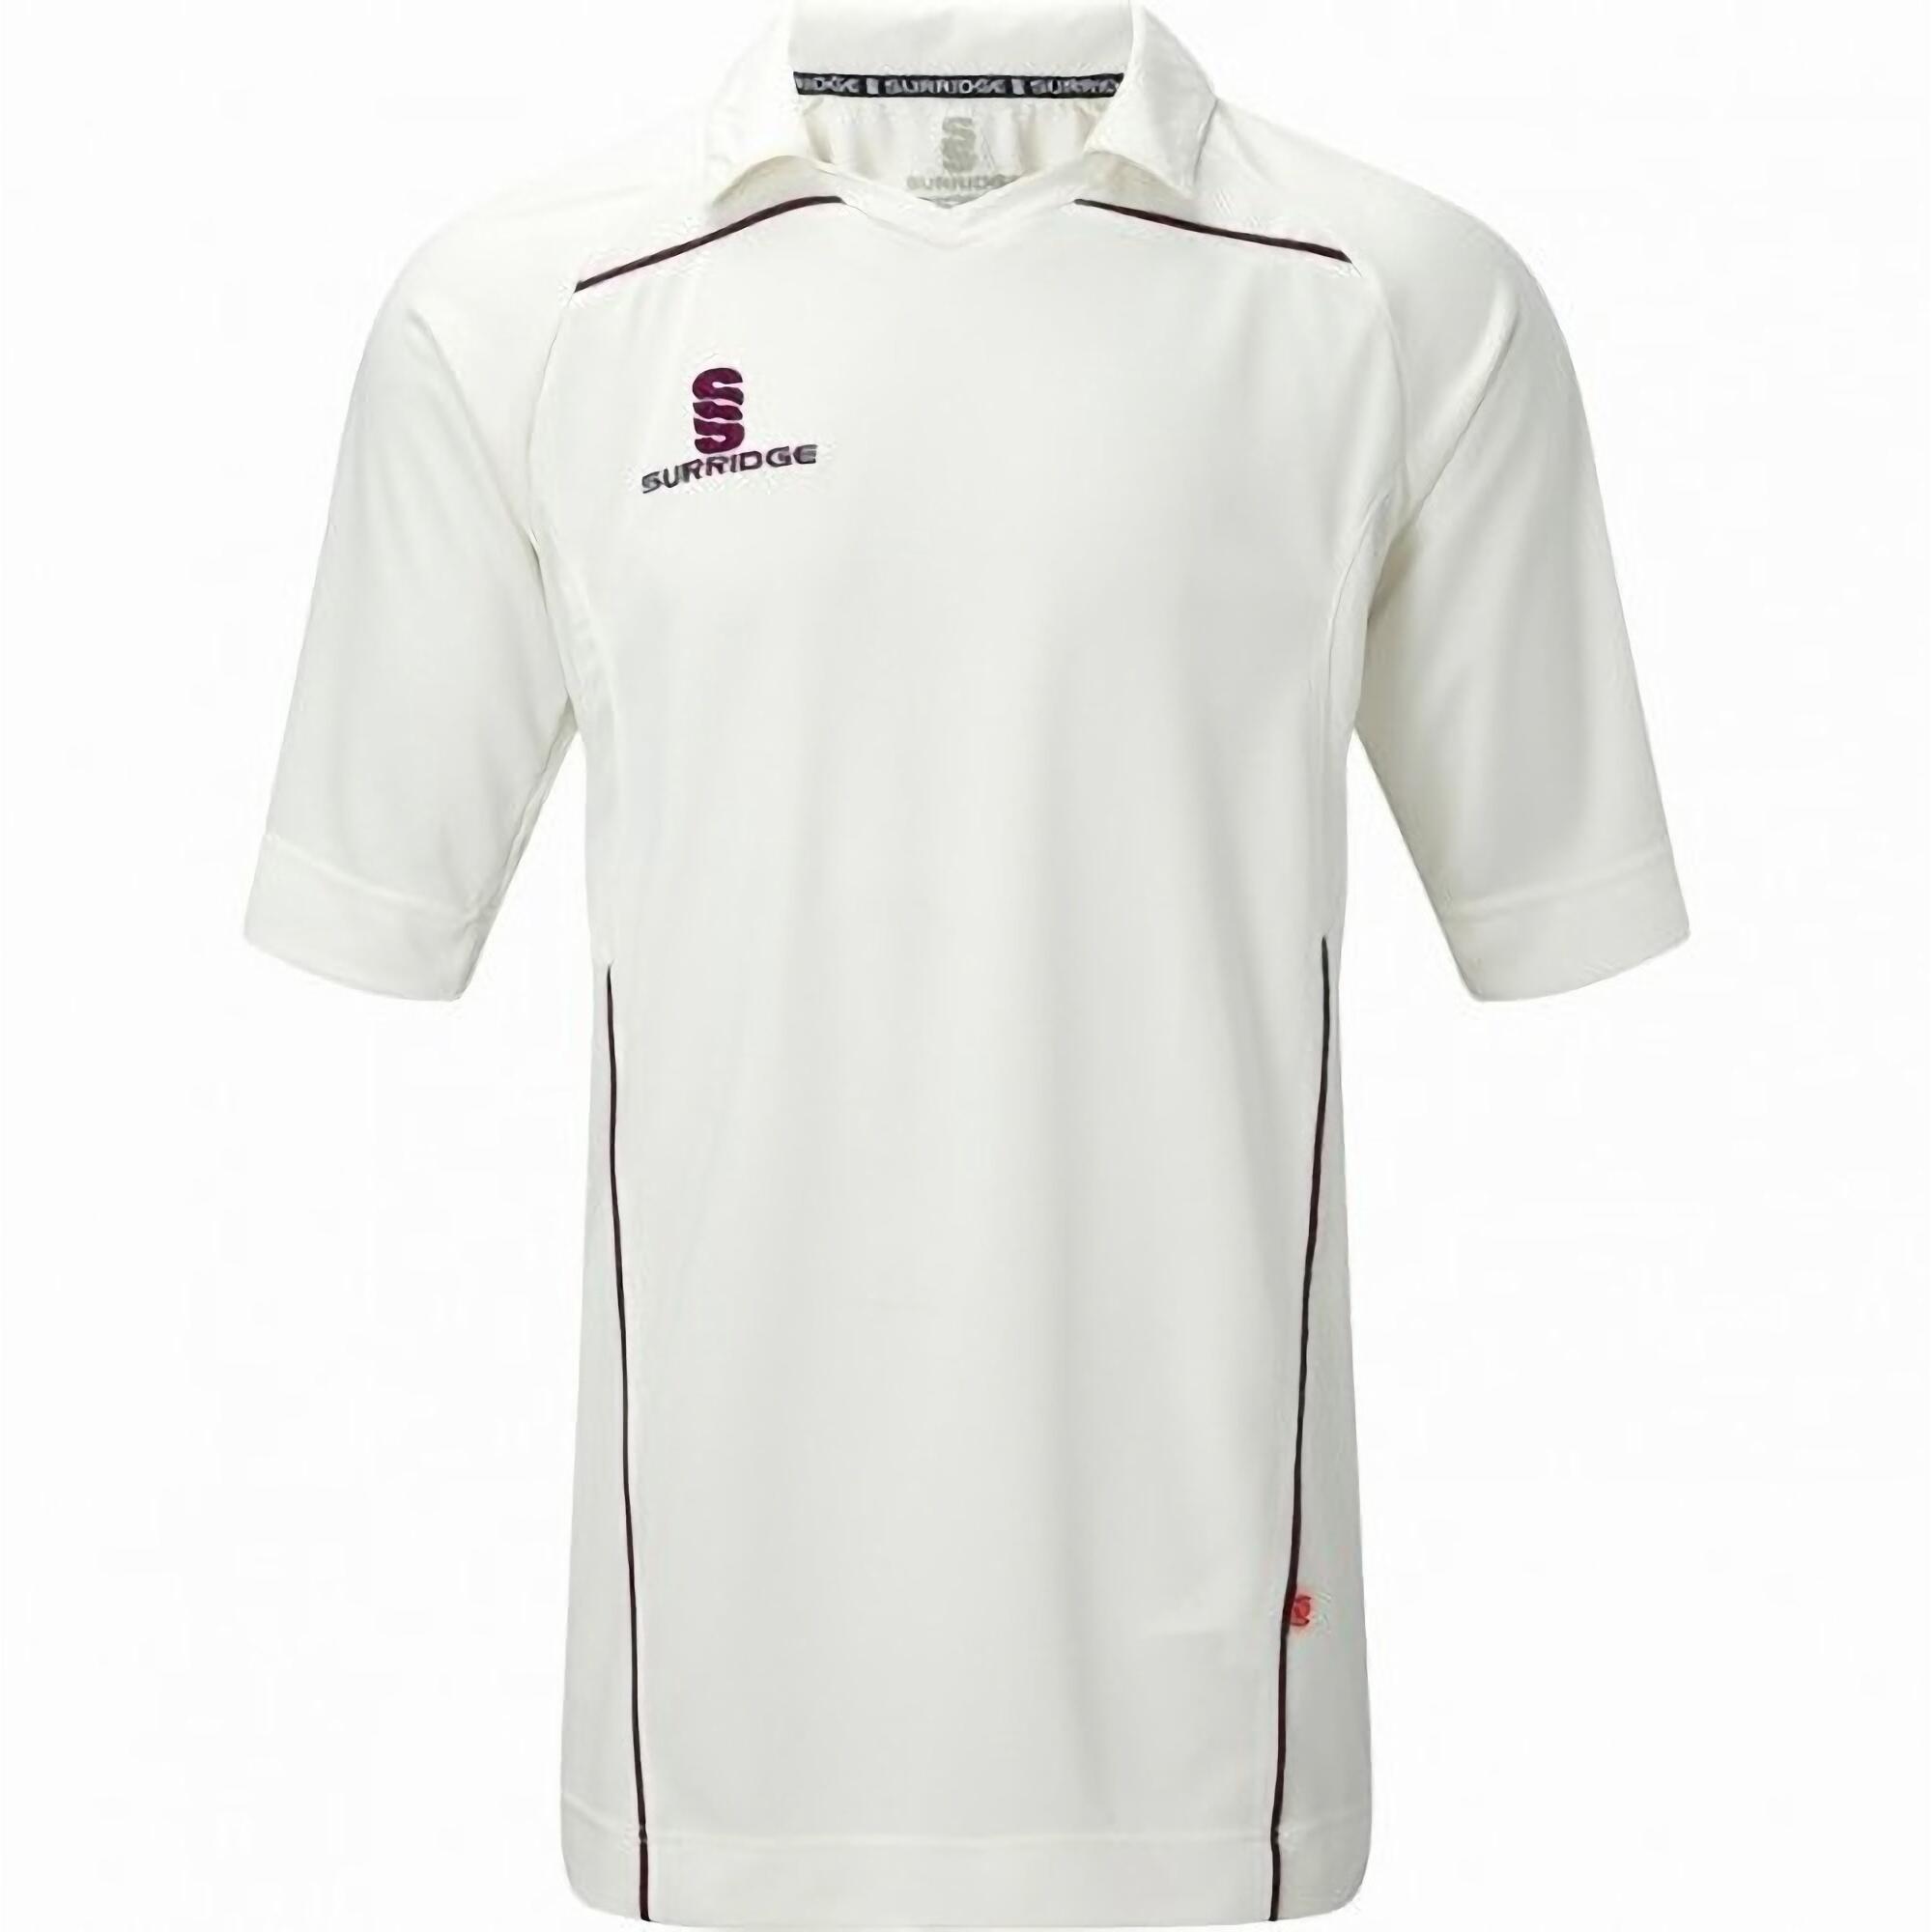 SURRIDGE Mens Century Sports Cricket Shirt (White/ Maroon trim)